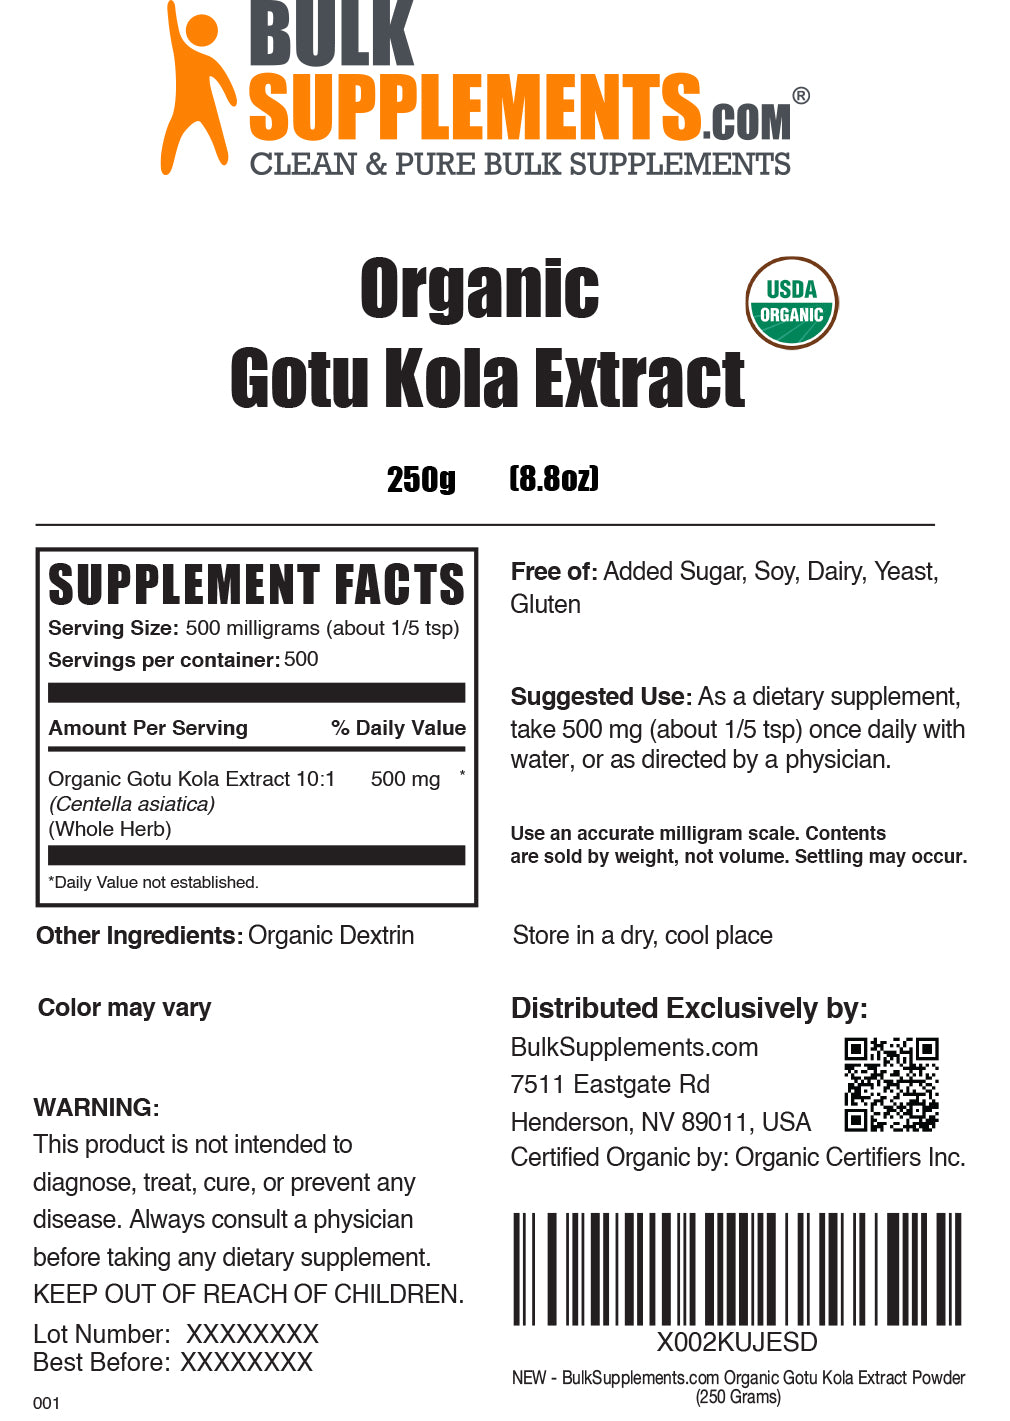 Organic gotu kola extract powder label 250g